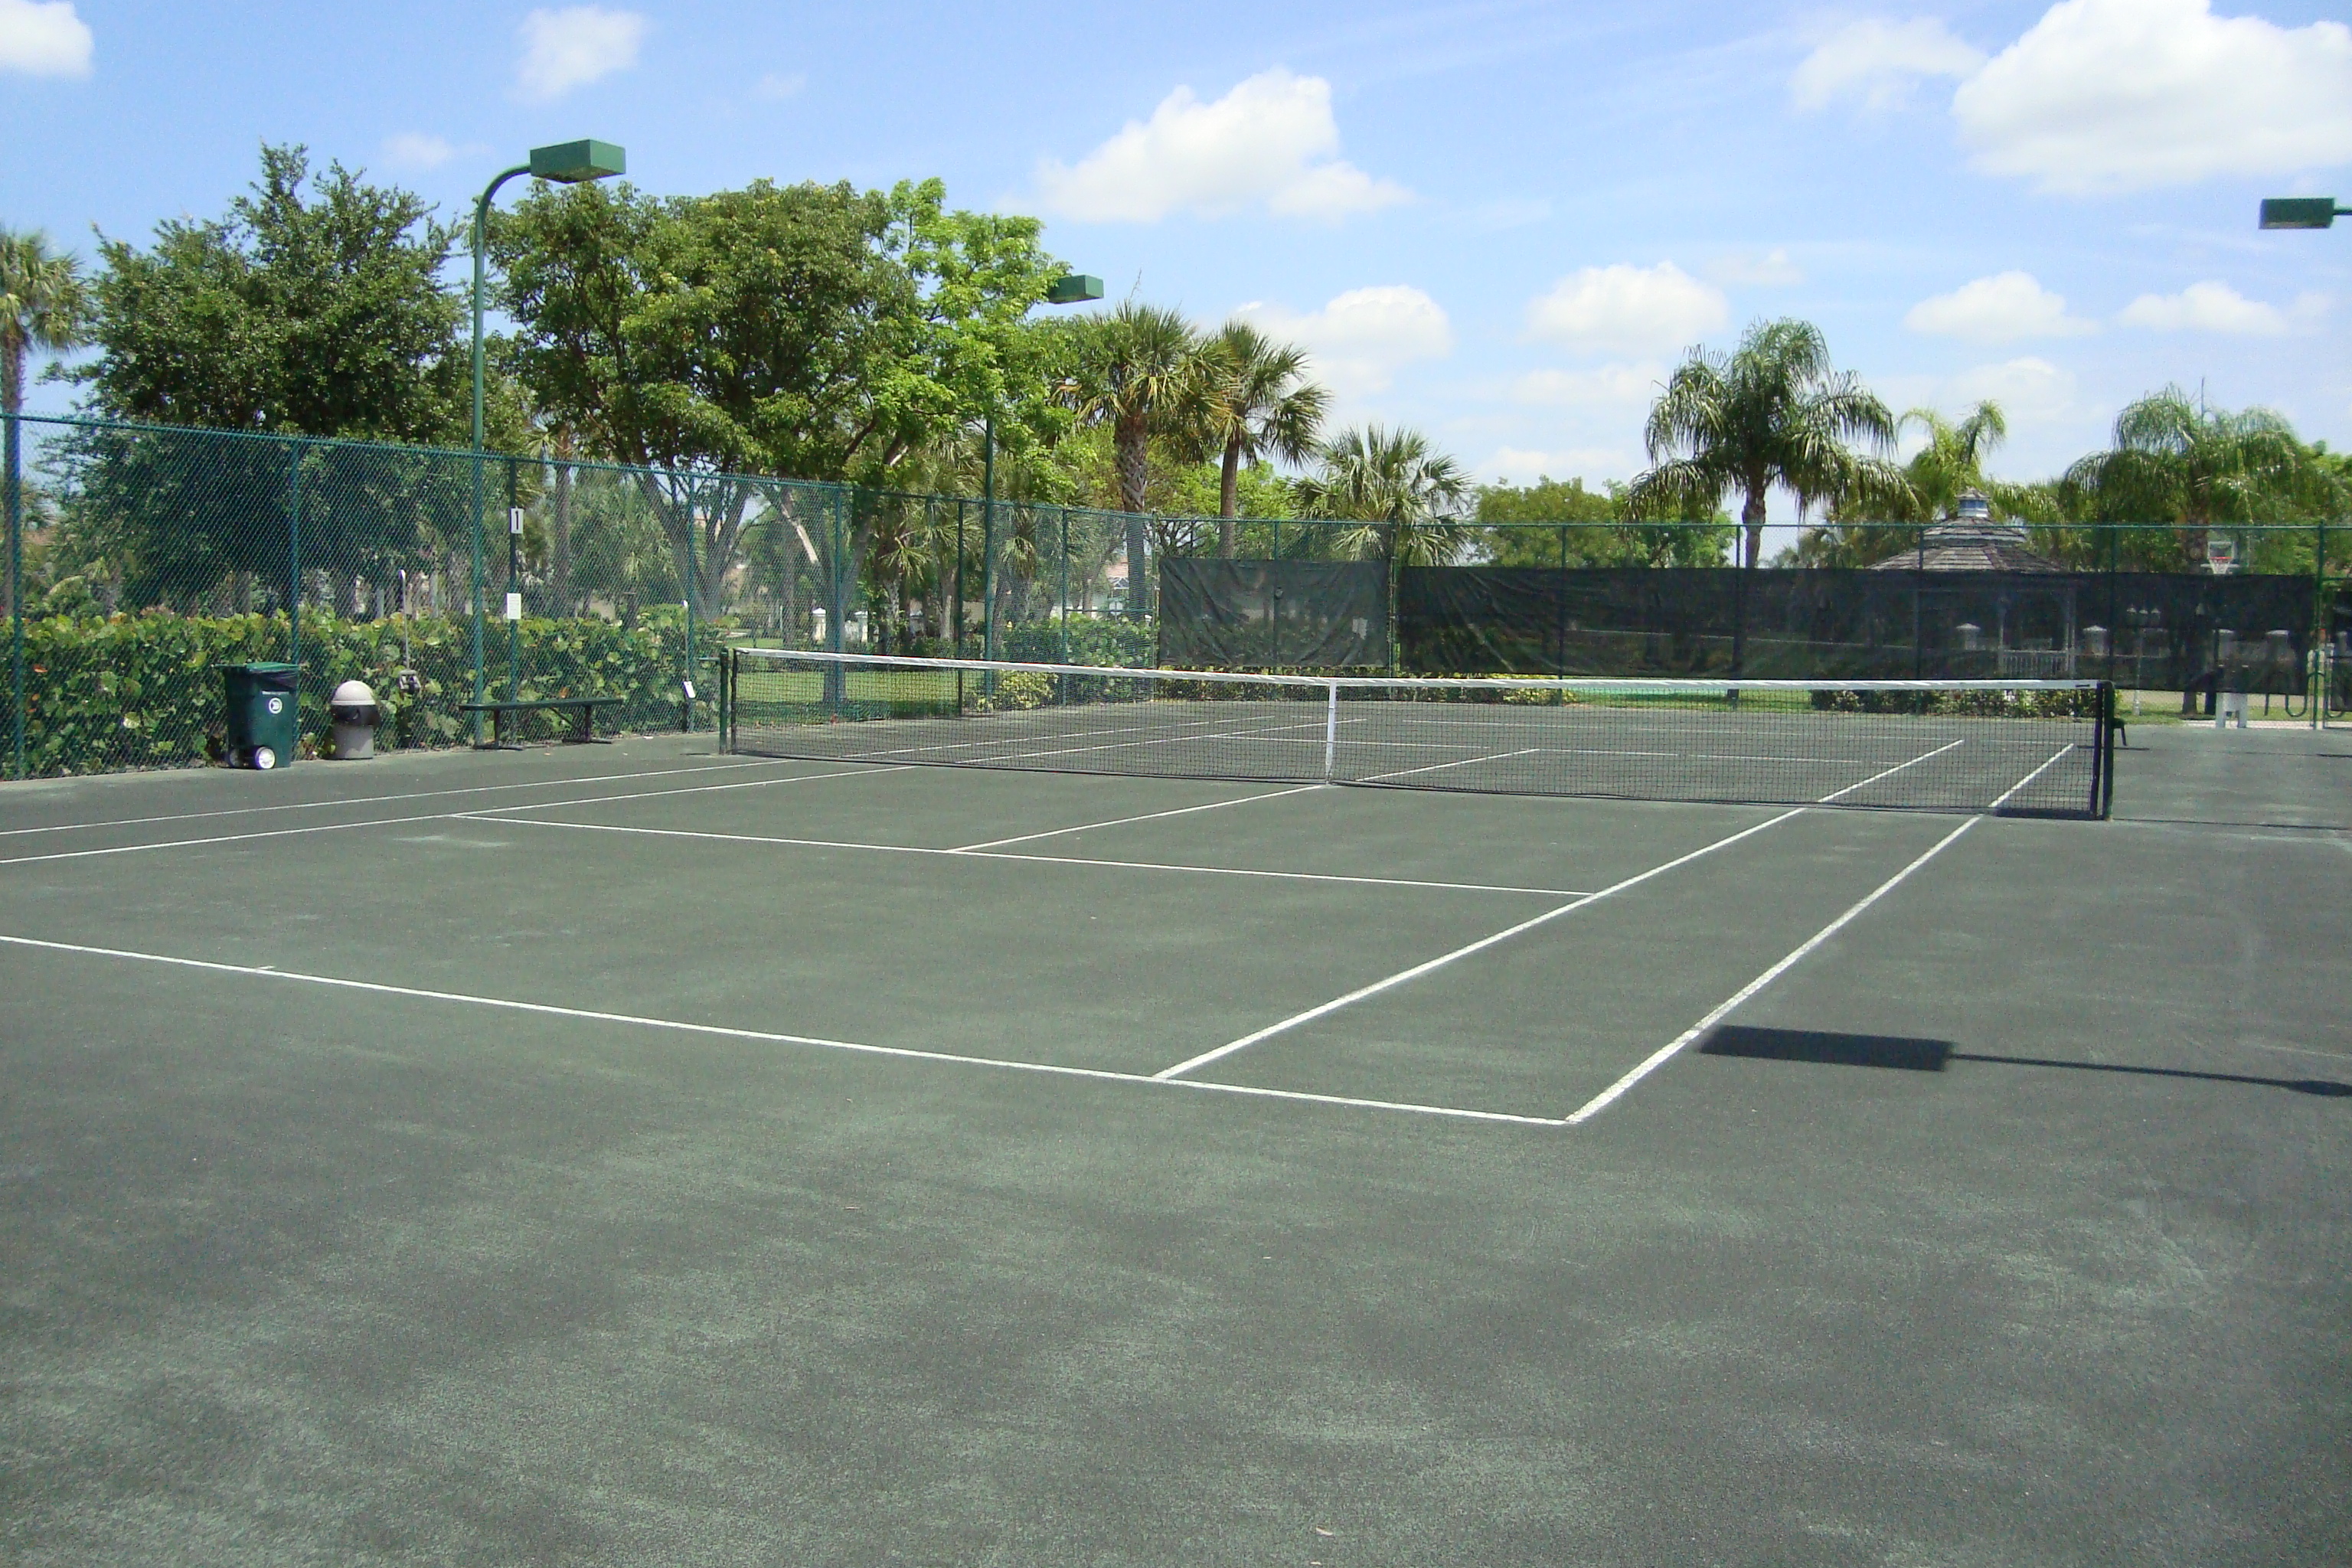 Tennis courts at Bridgewater Bay in Naples, Florida.